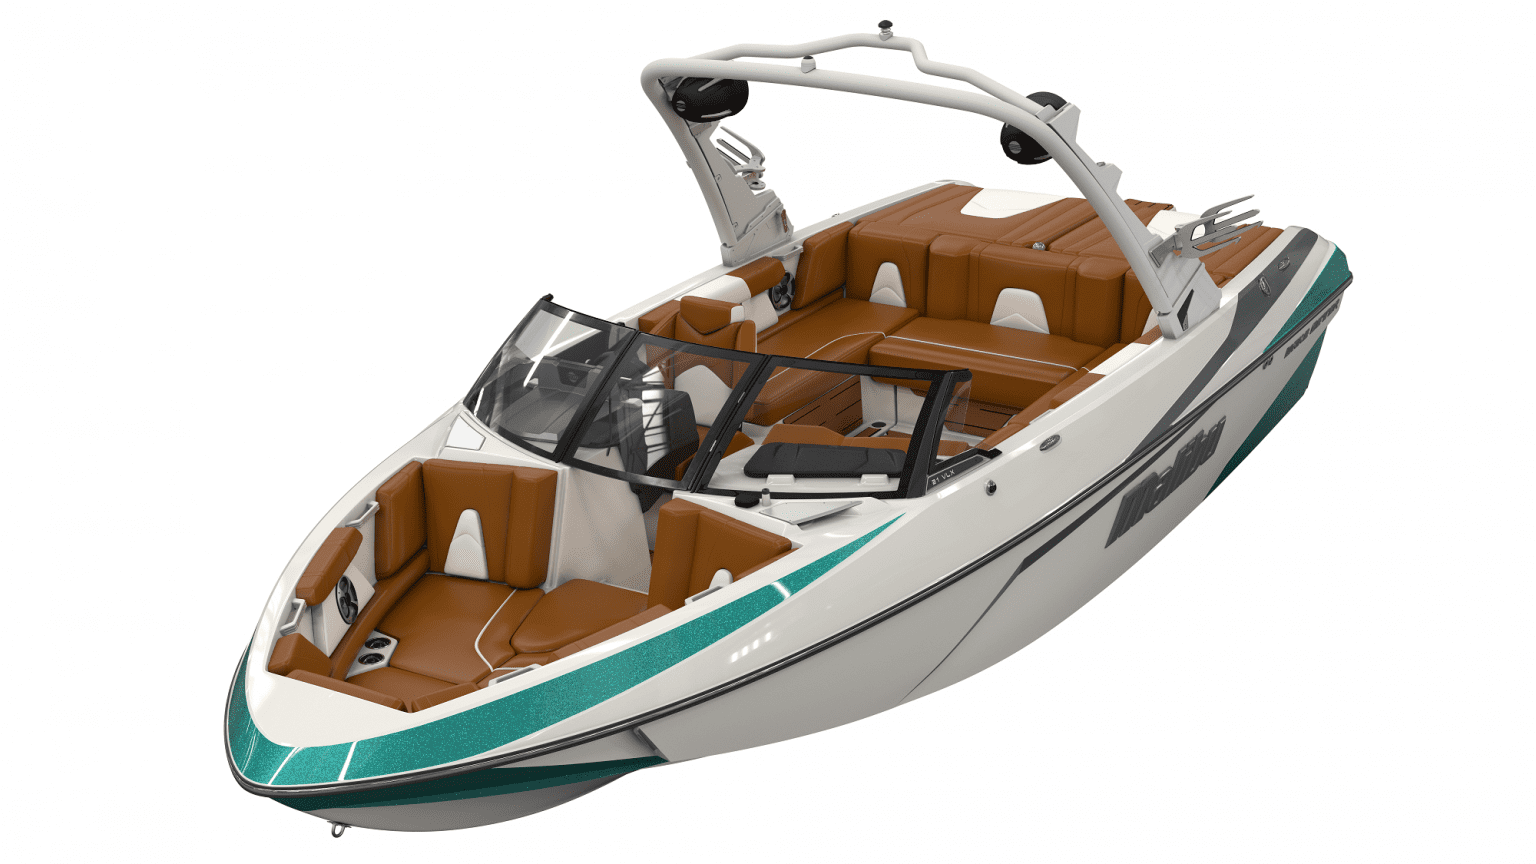 2021 Malibu Boat Collection Minnesota Inboard Water Sports